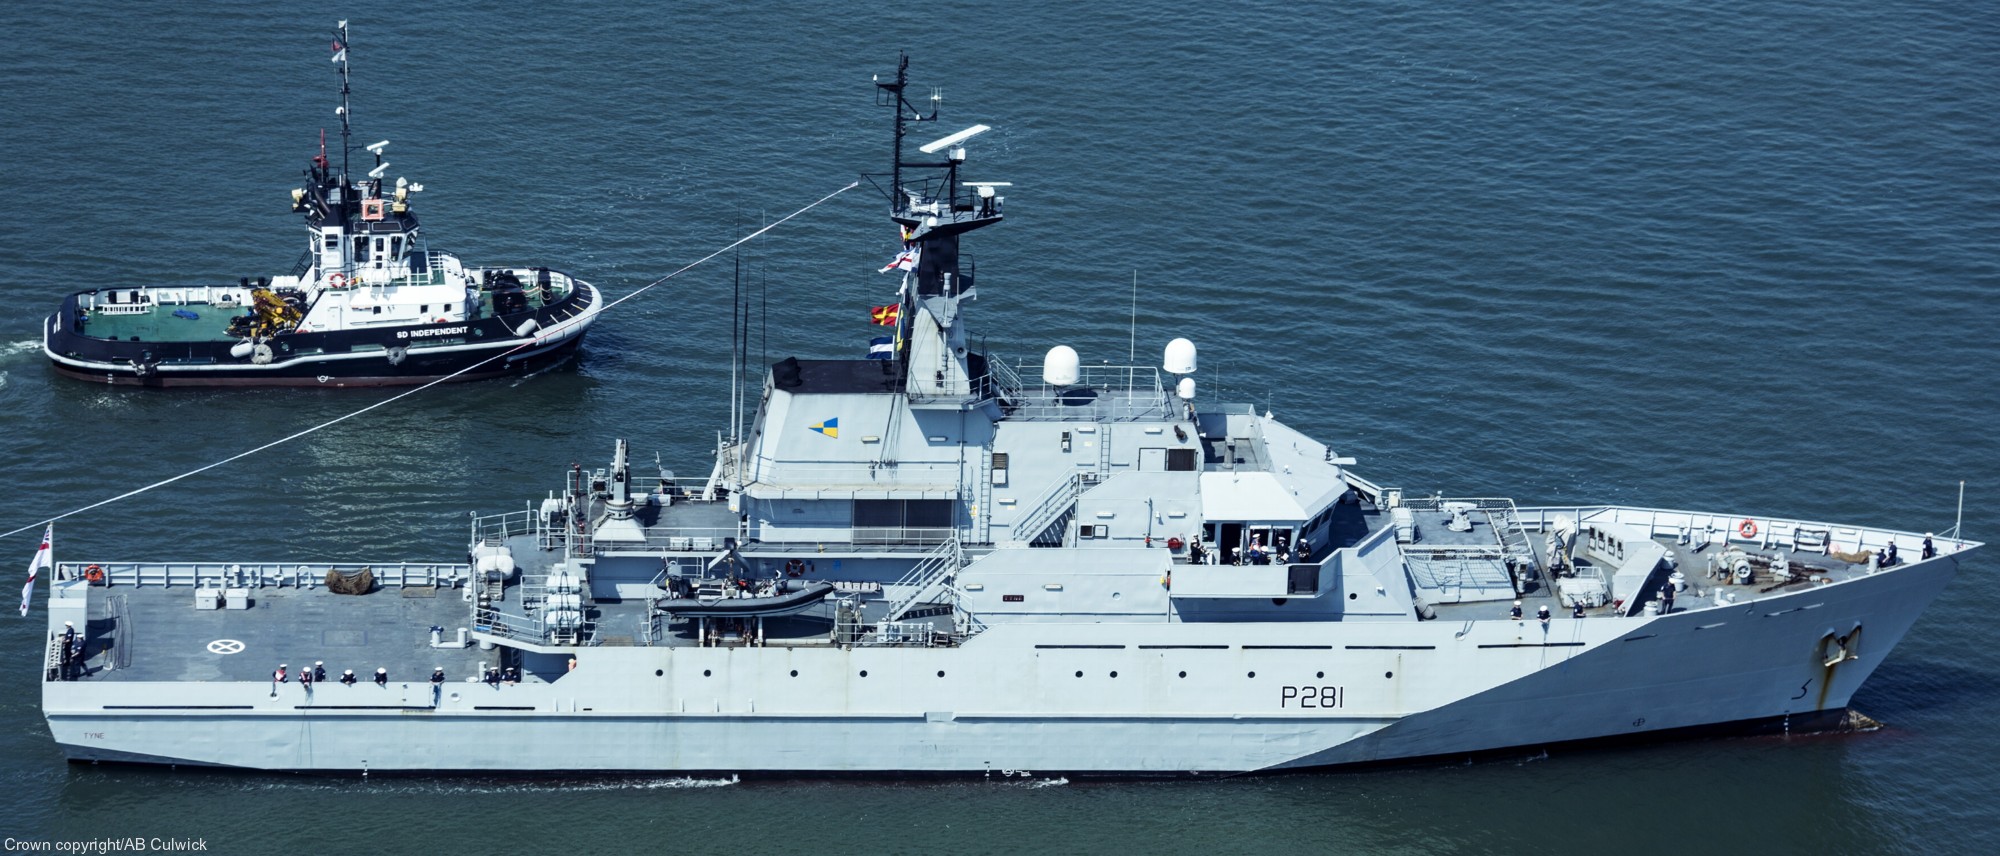 p281 hms tyne river class offshore patrol vessel opv royal navy 16